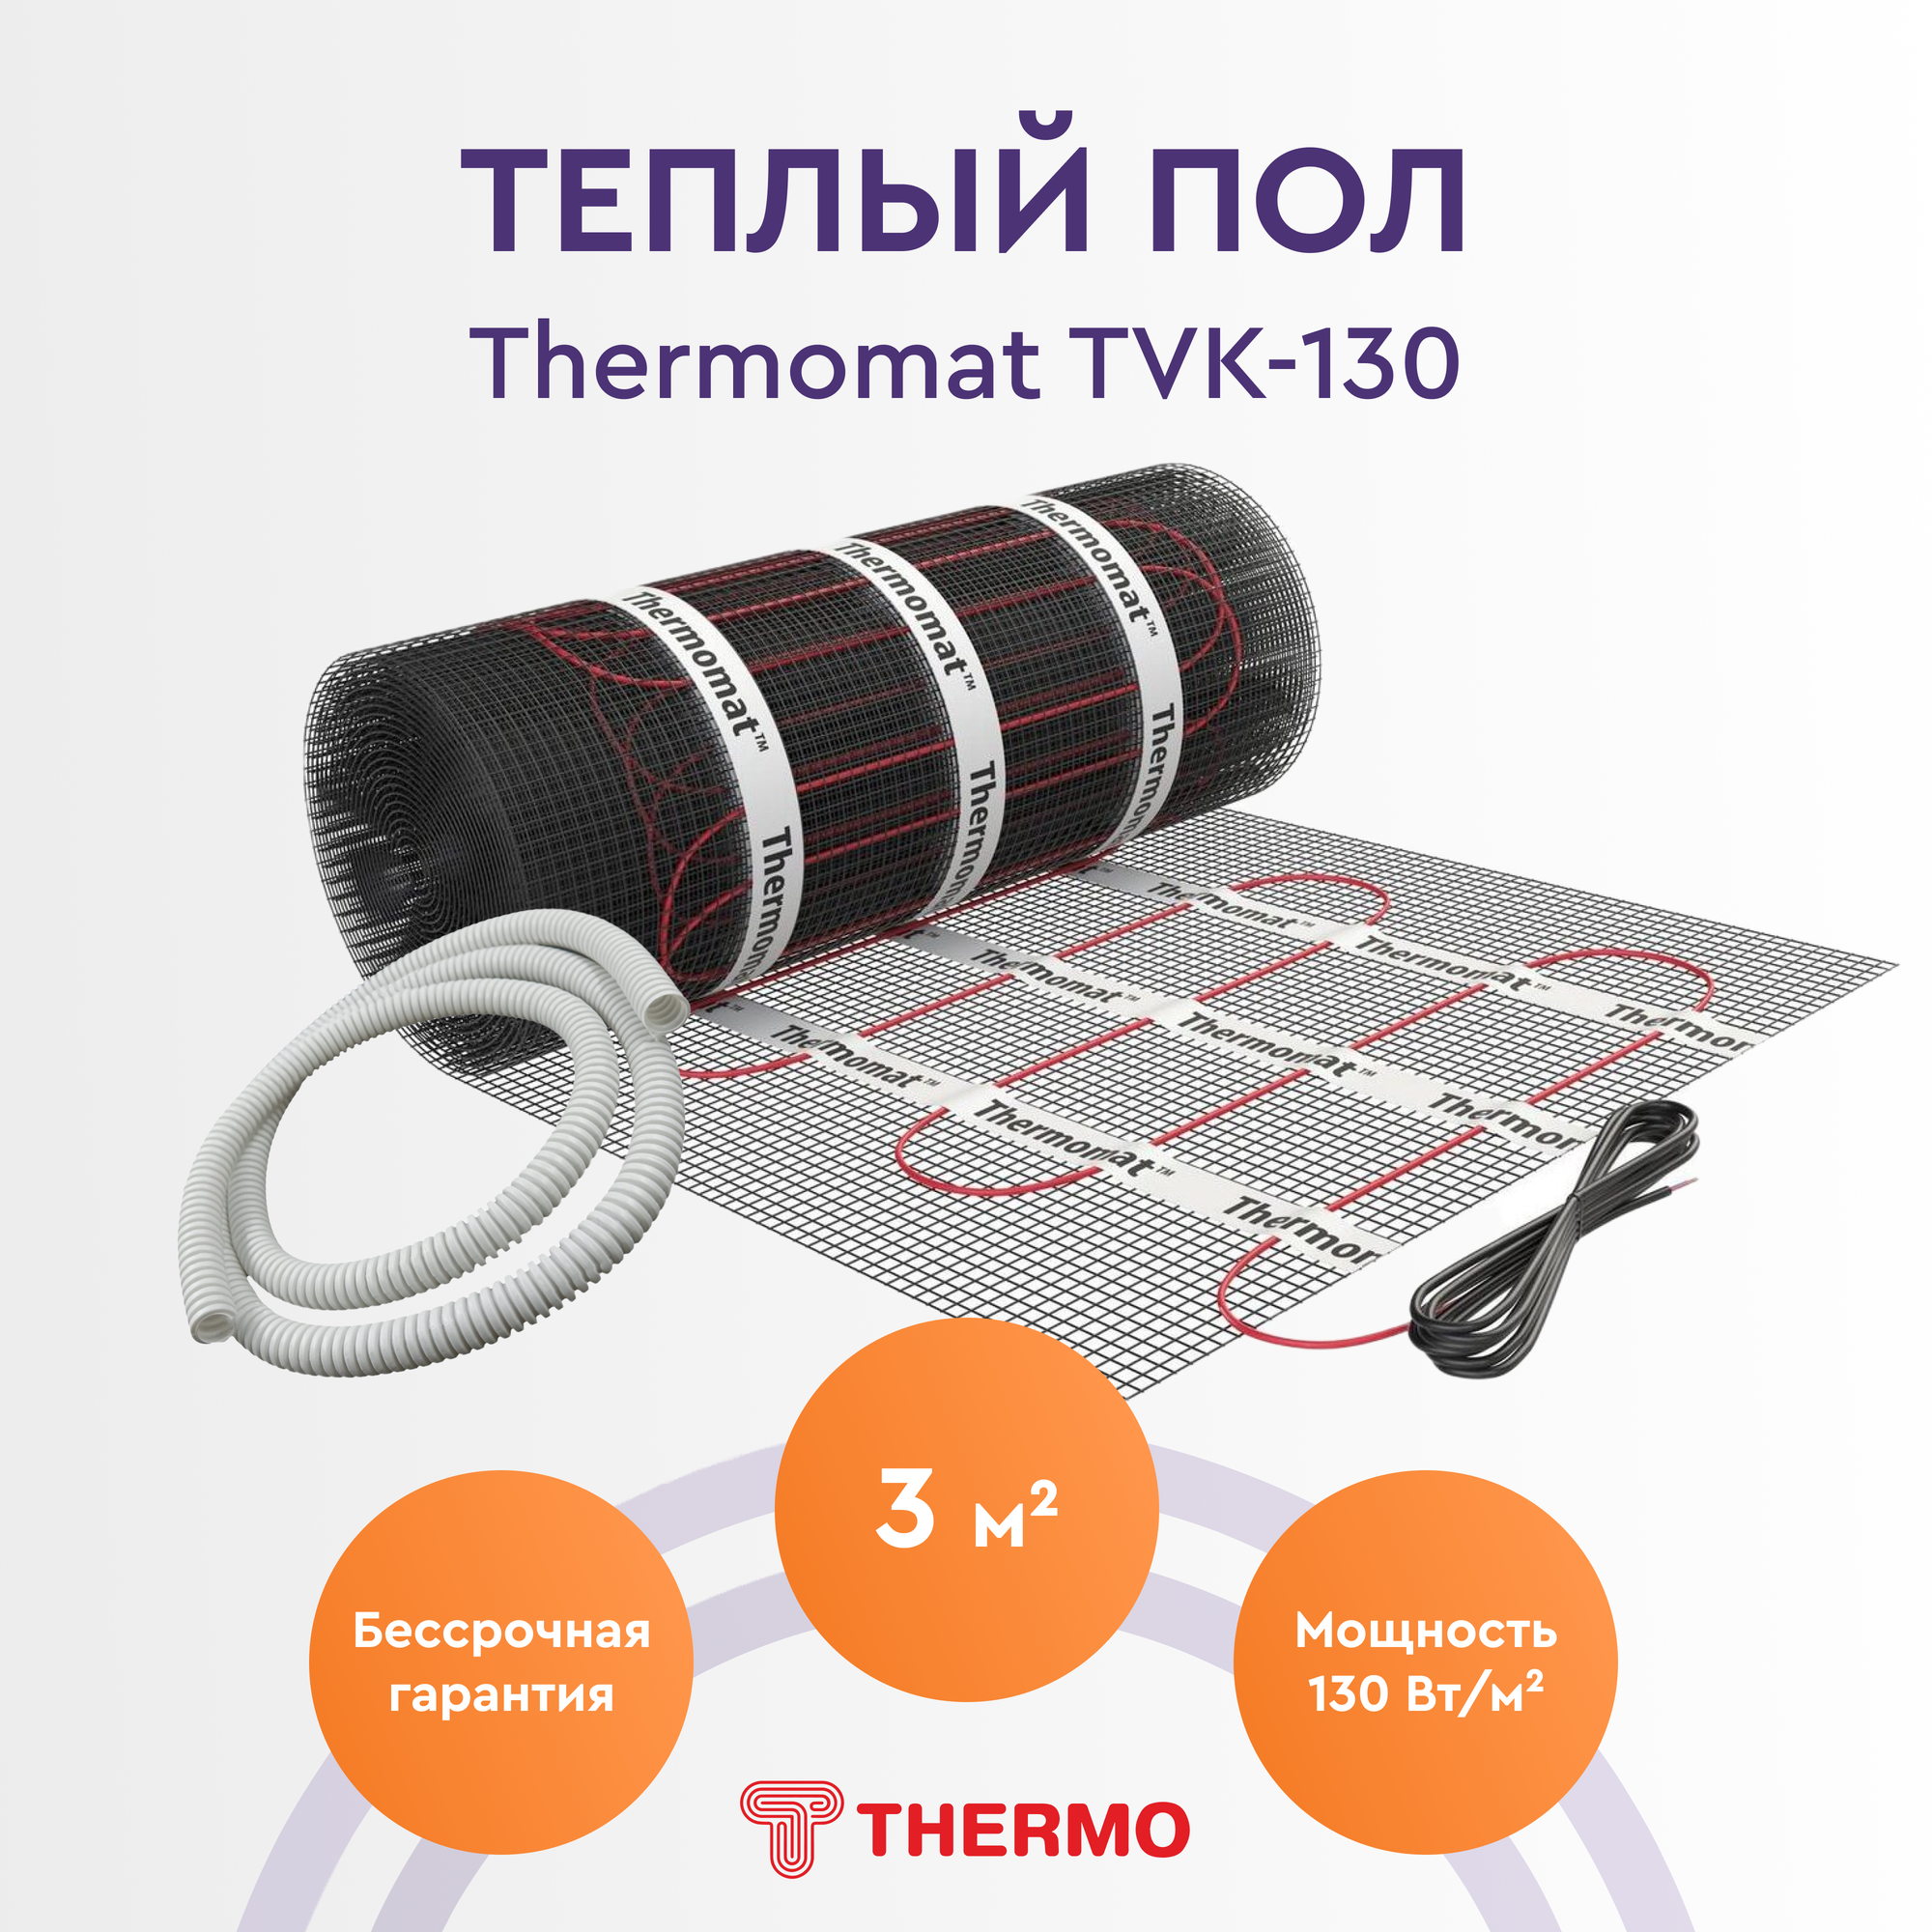 Теплый пол Thermo Thermomat TVK-130 3м. кв.